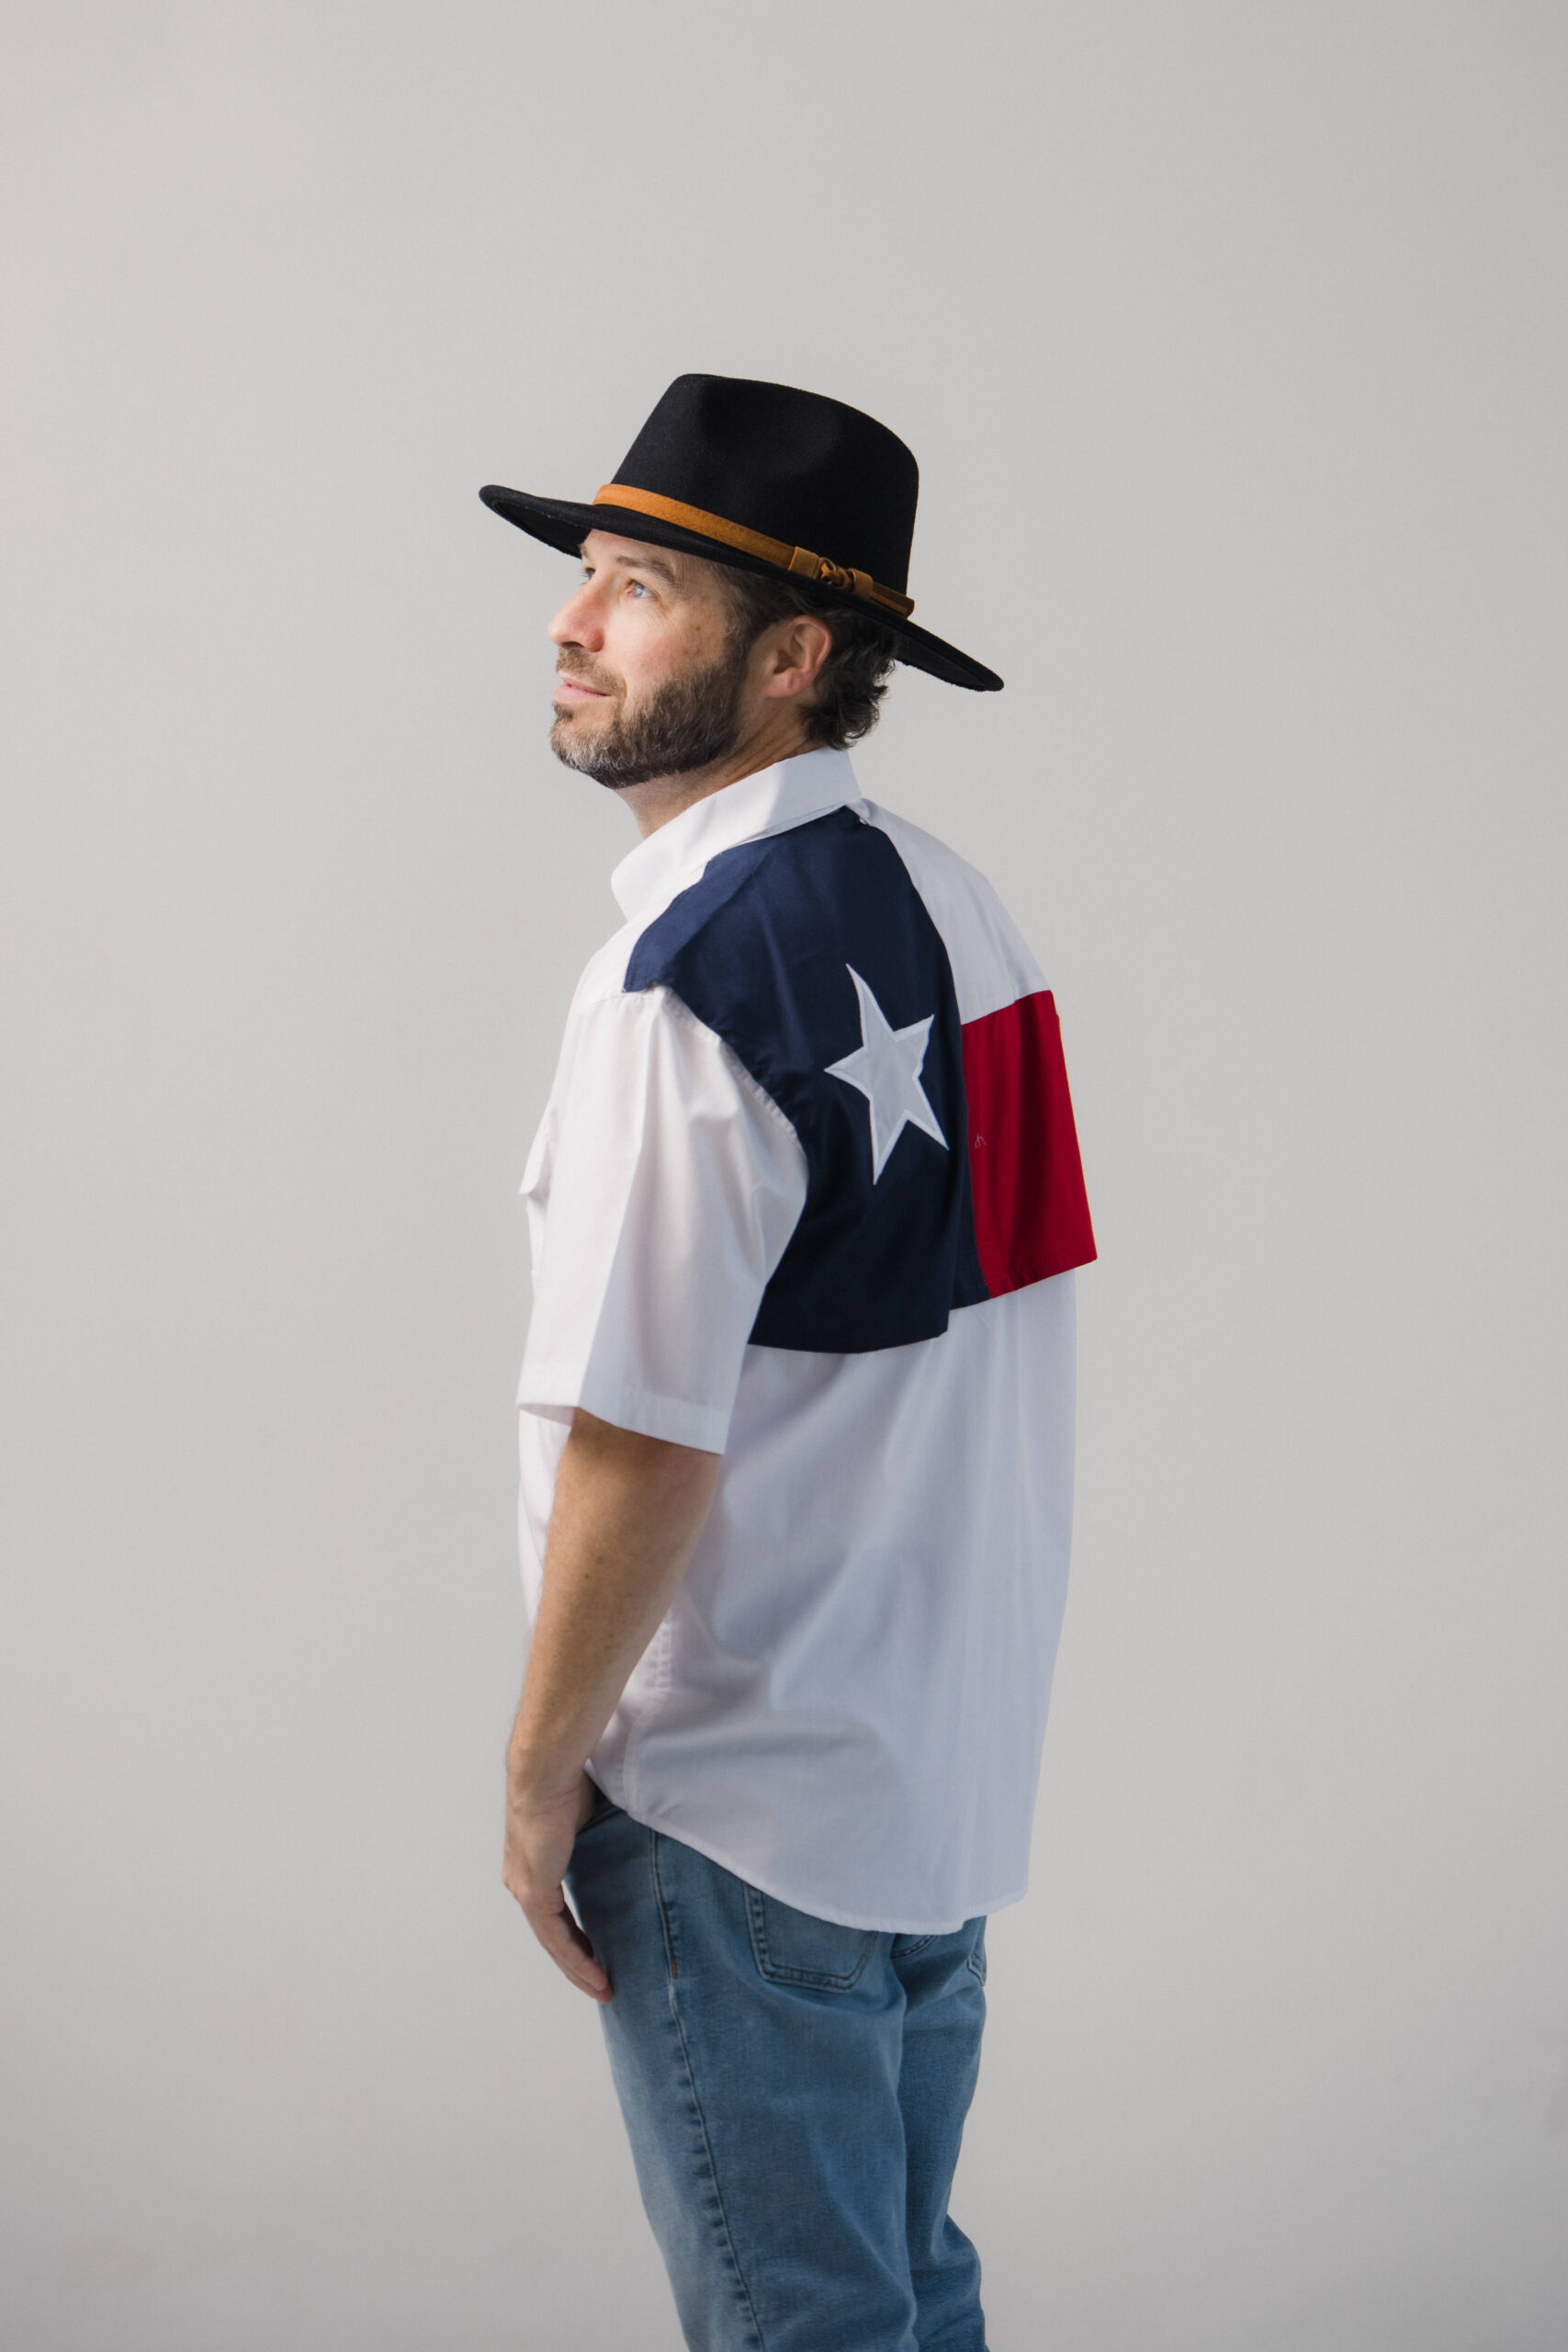 Fishing Shirts - Men's -Texas Flag Fishing Shirt - FH Outfitters